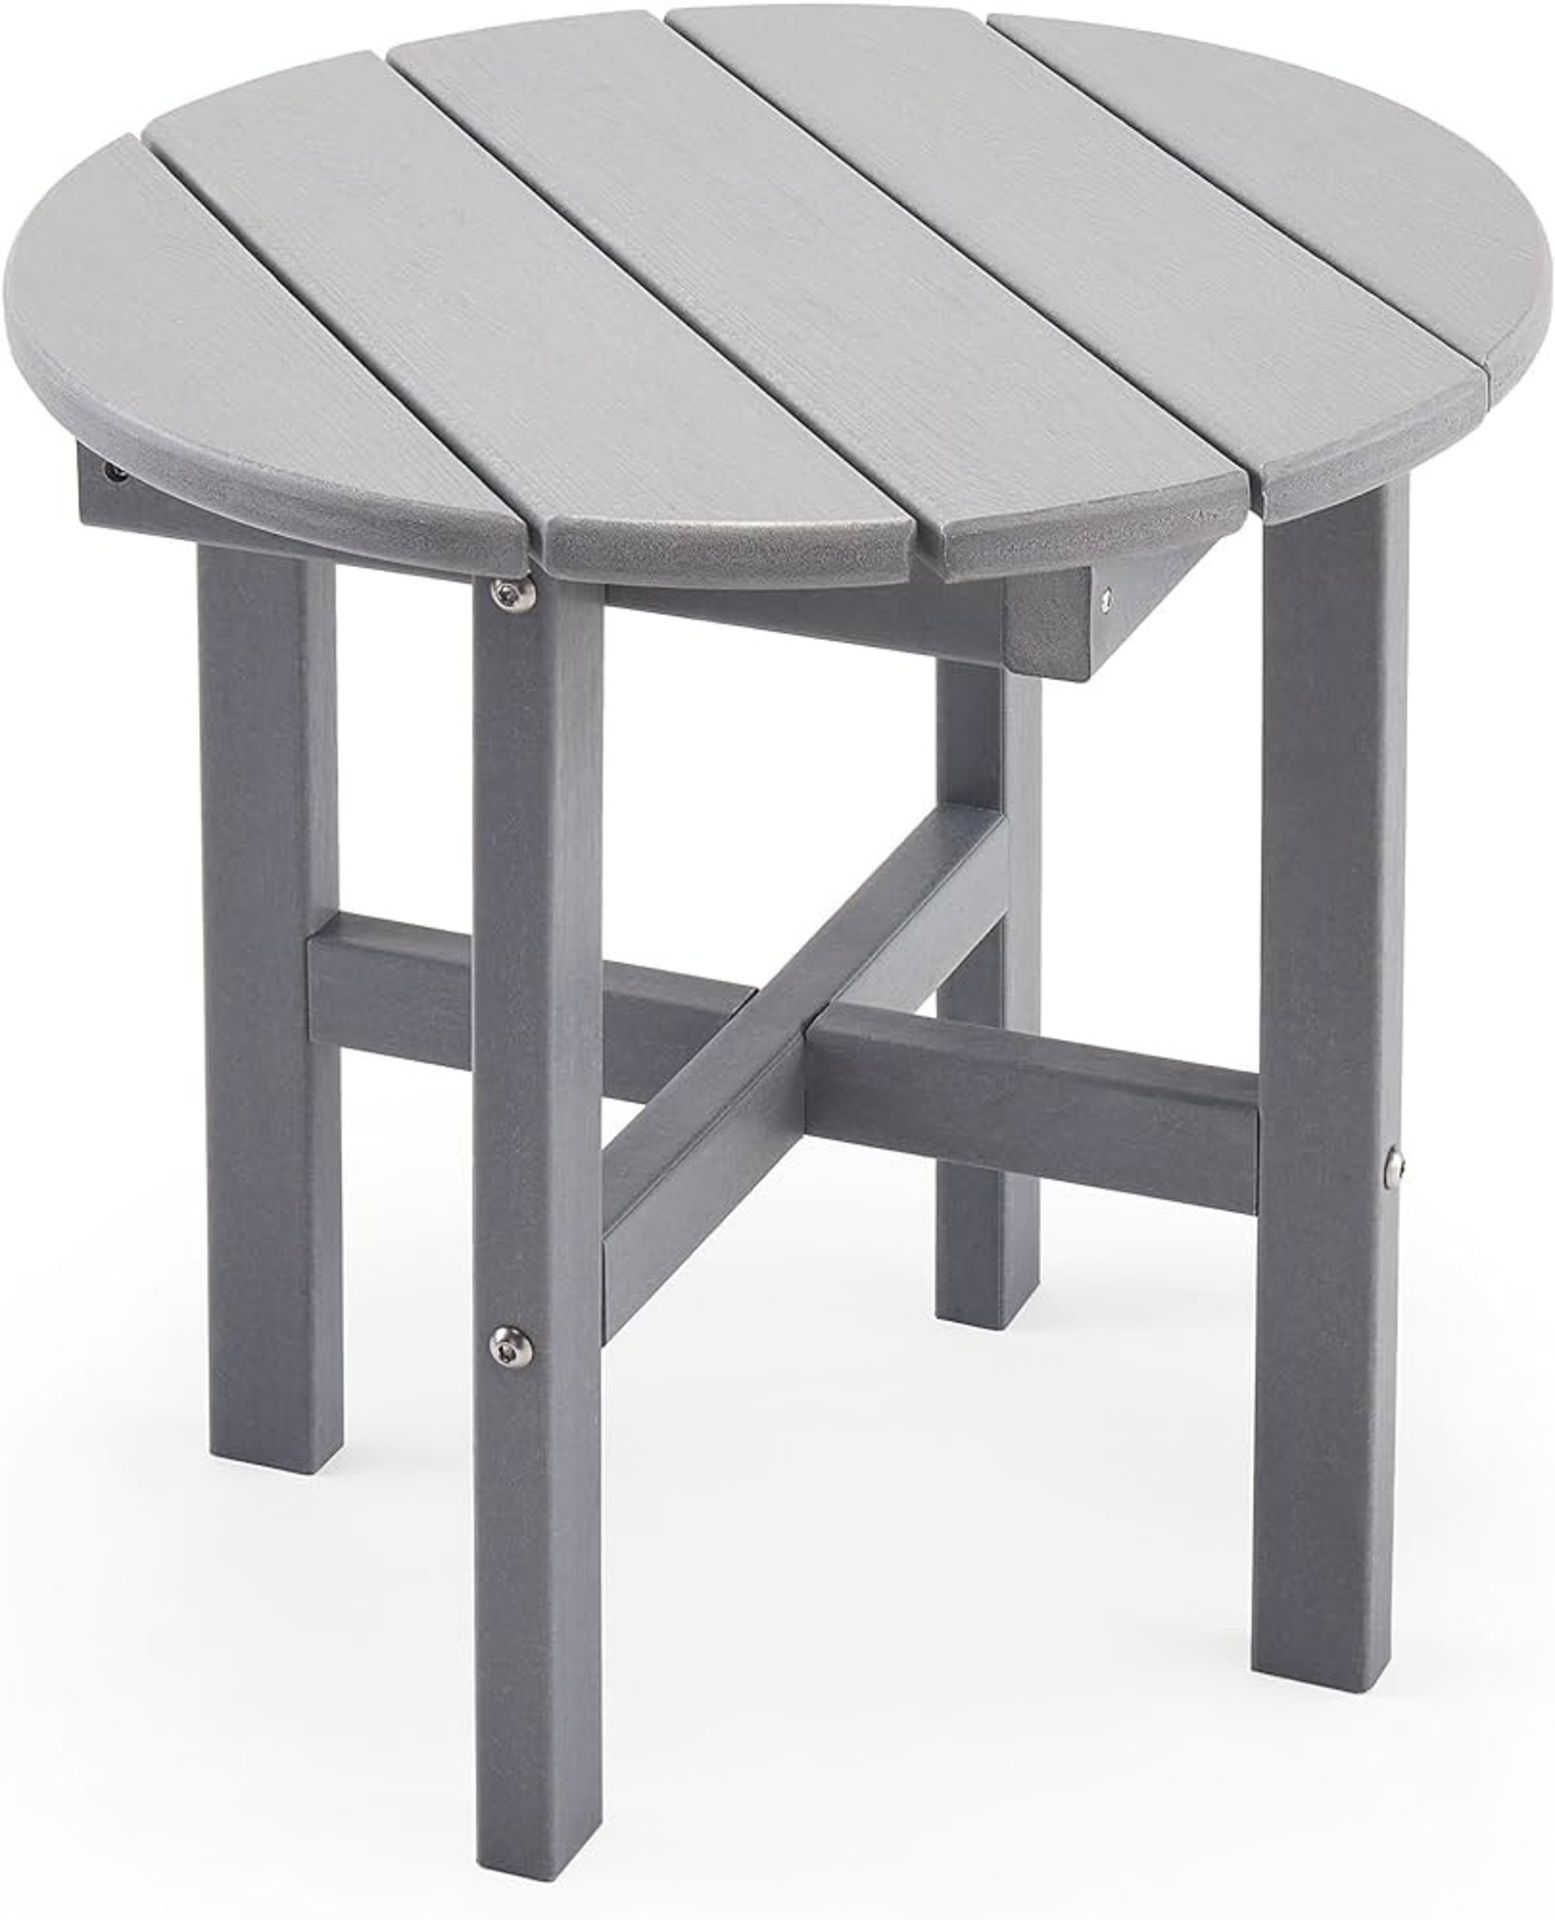 Adirondack Round Side Table for Garden - Compact & Portable Grey - ER33